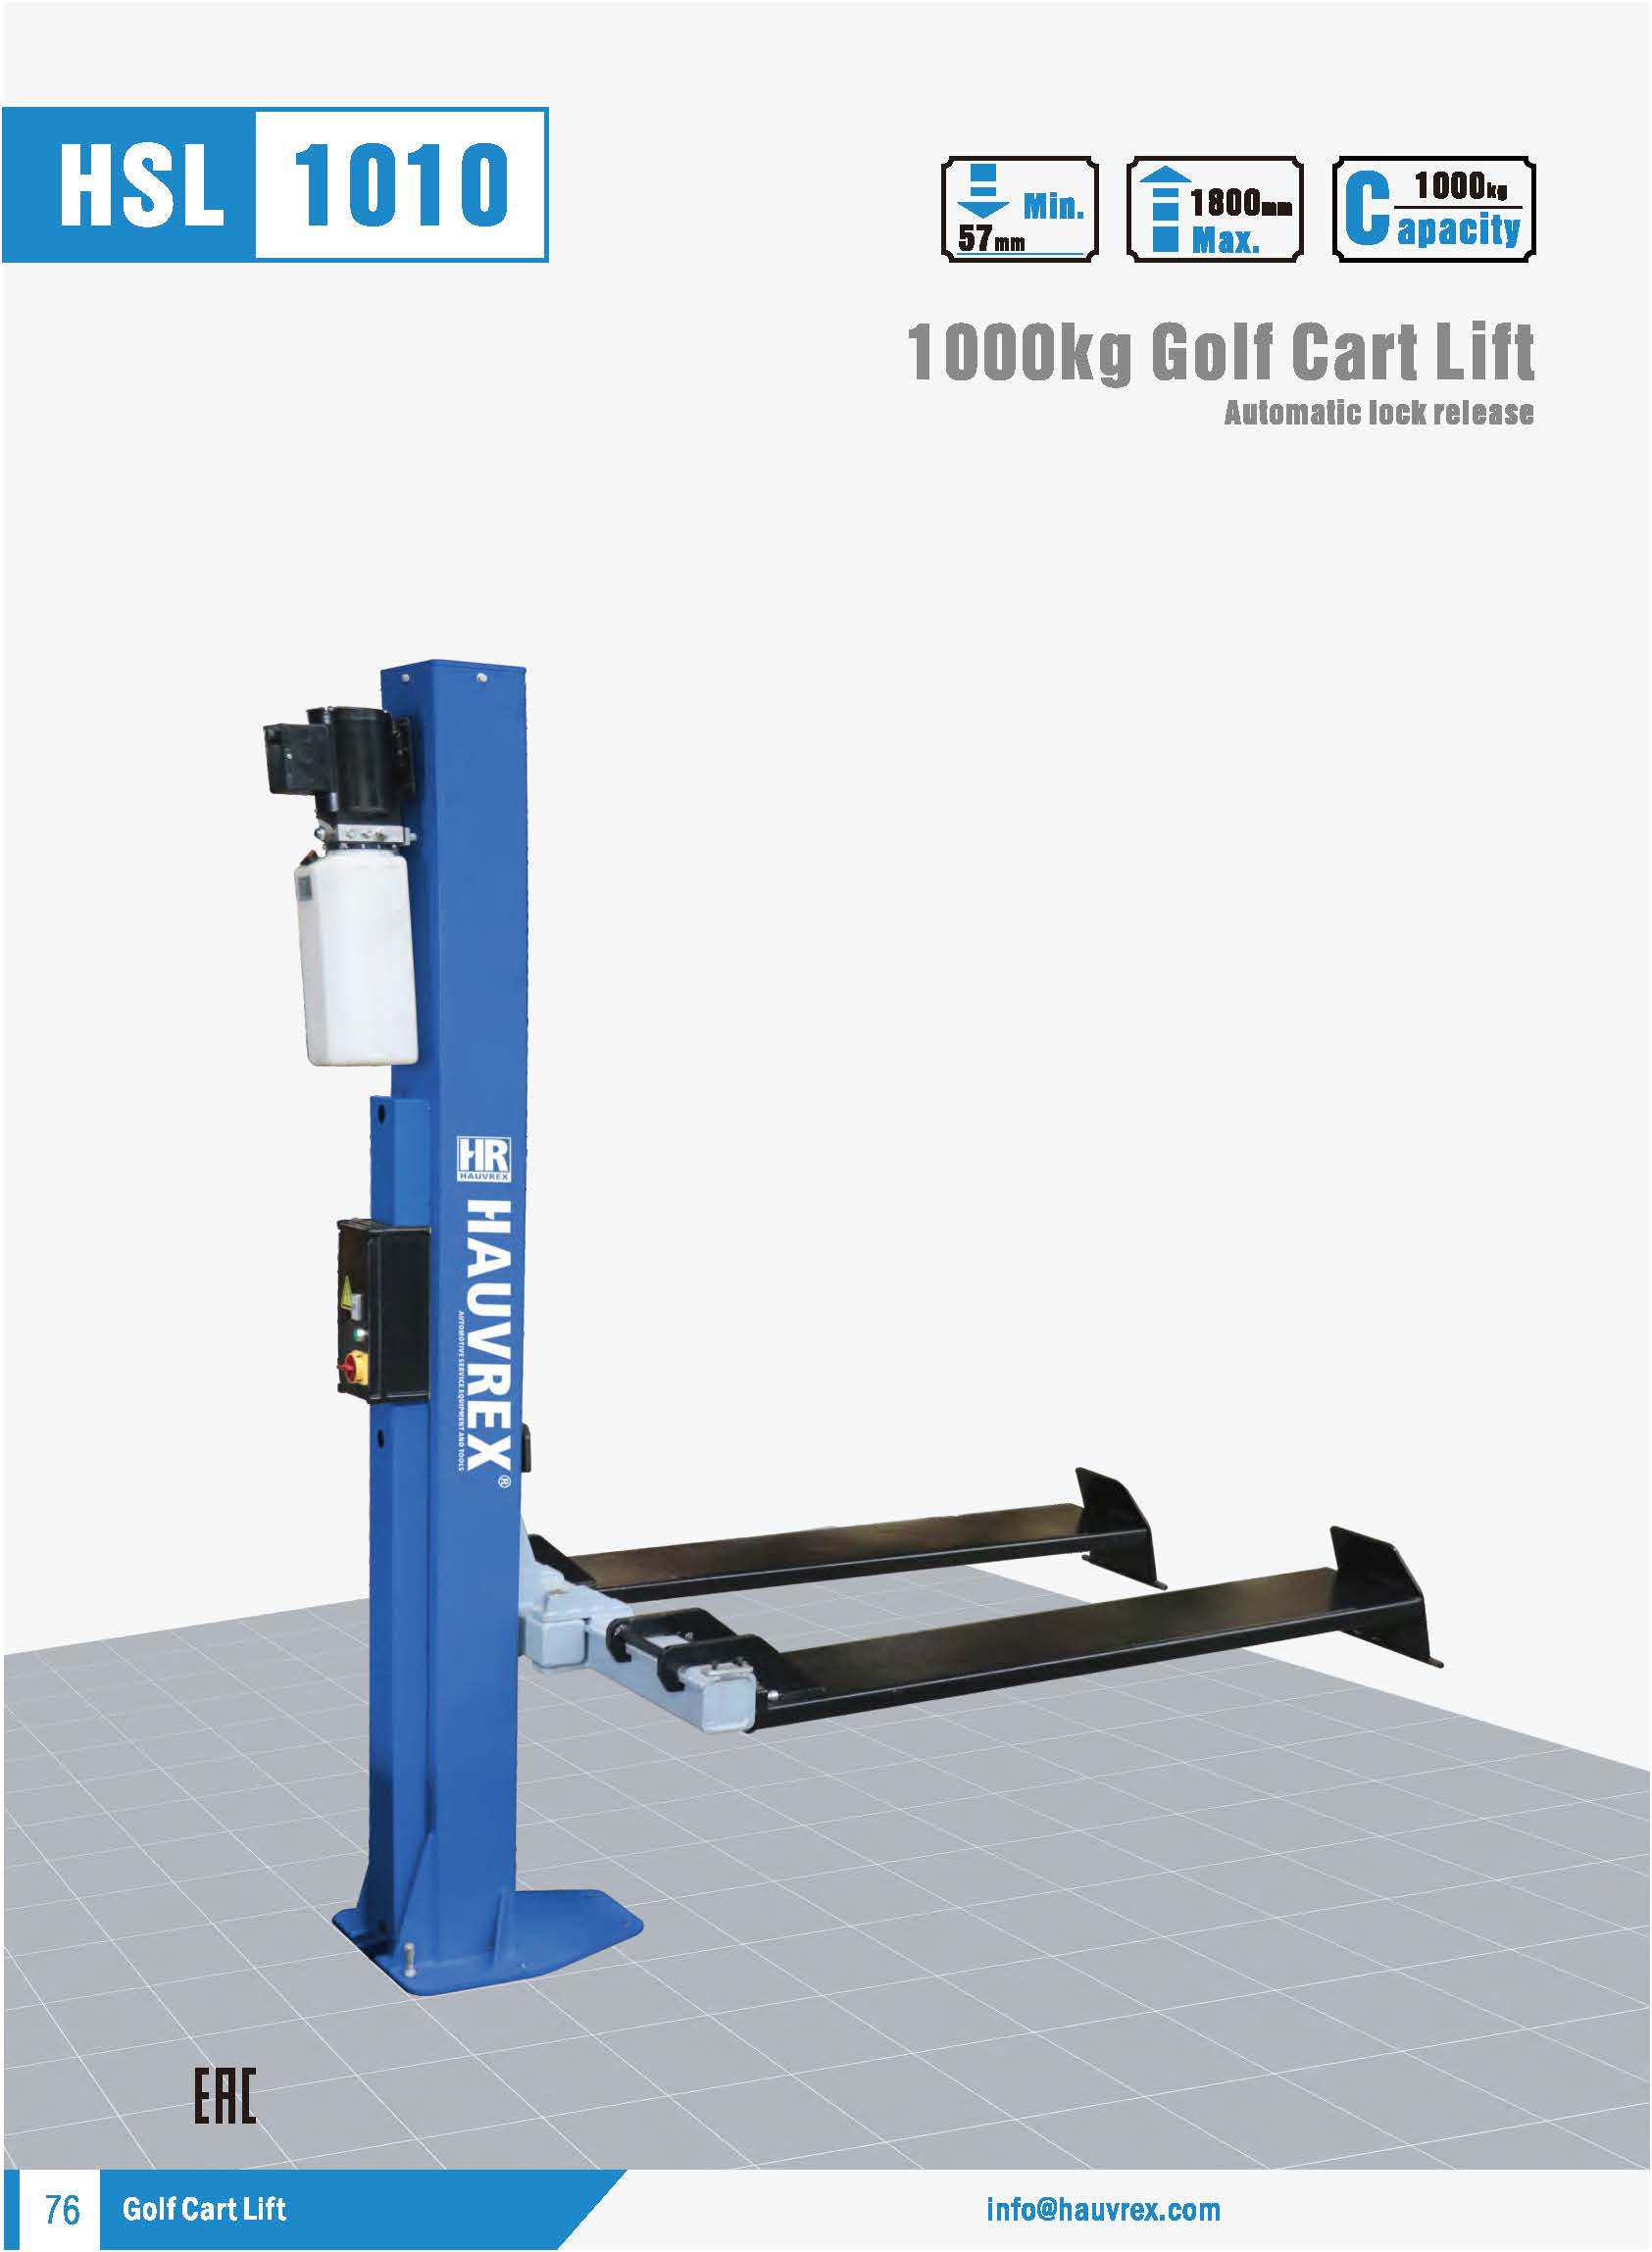 HSL1010 Golf Car Lift